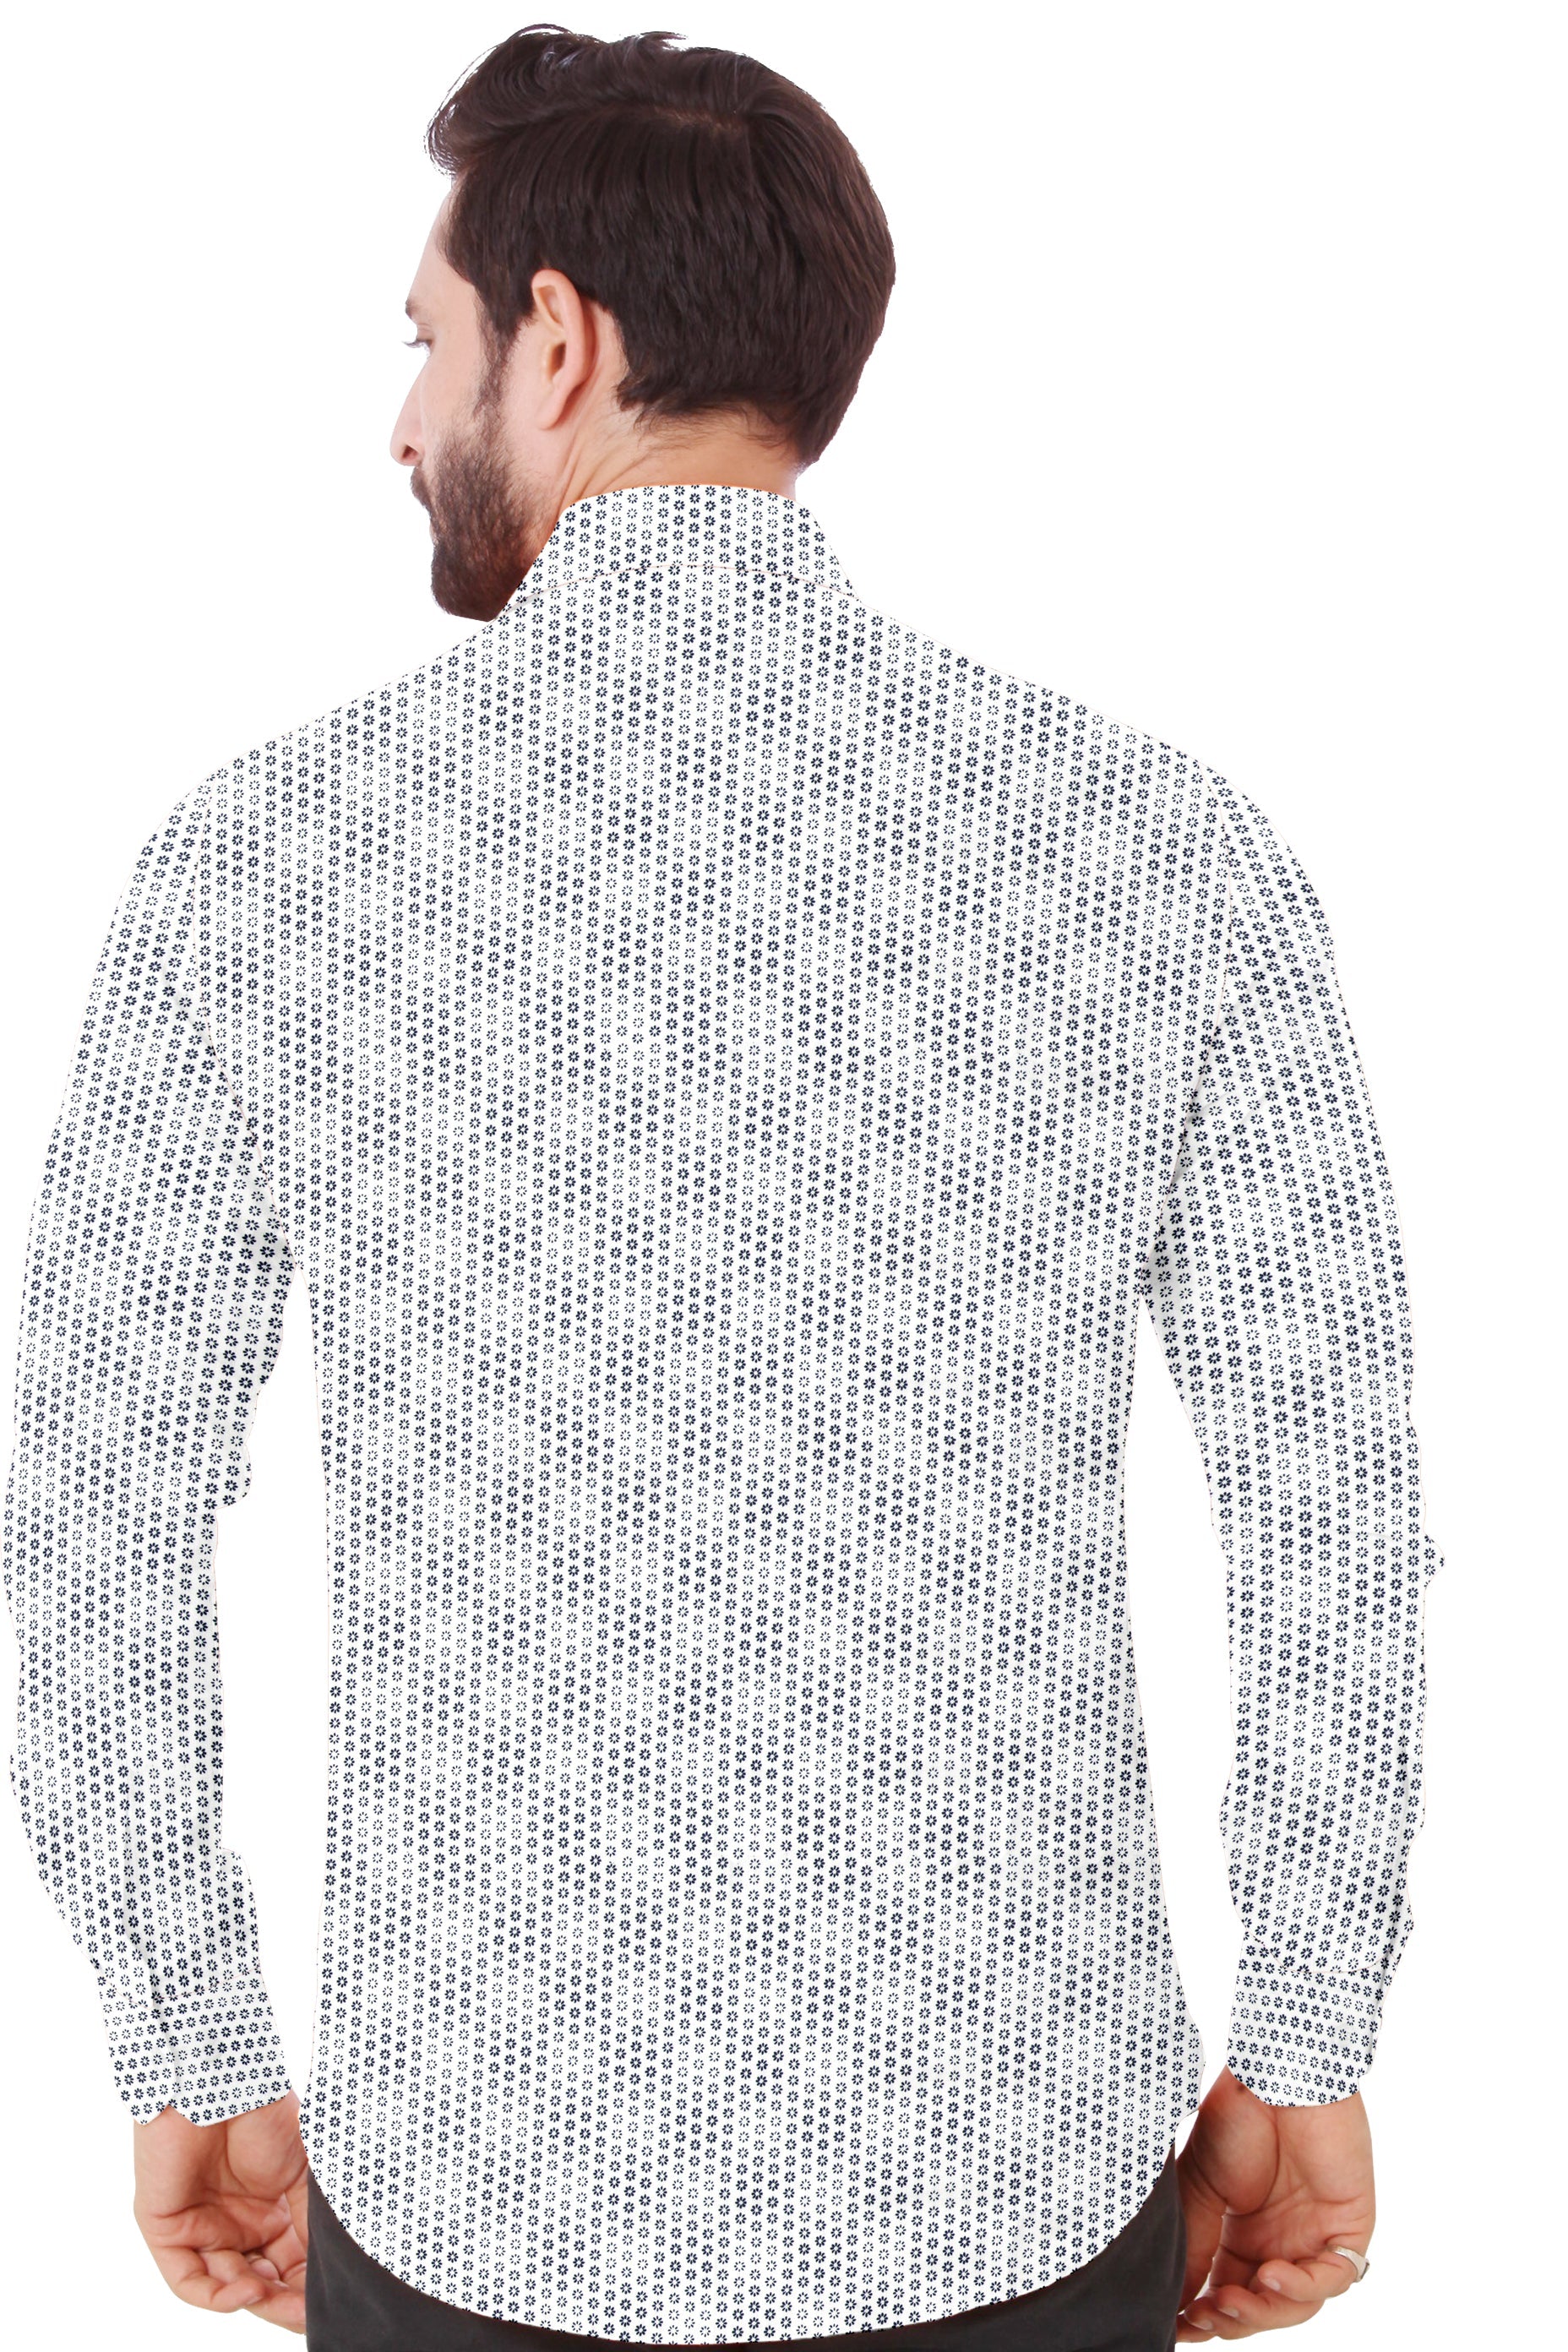 Men's White Design Casual Shirt Full Sleeves 100% Cotton - Styleflea